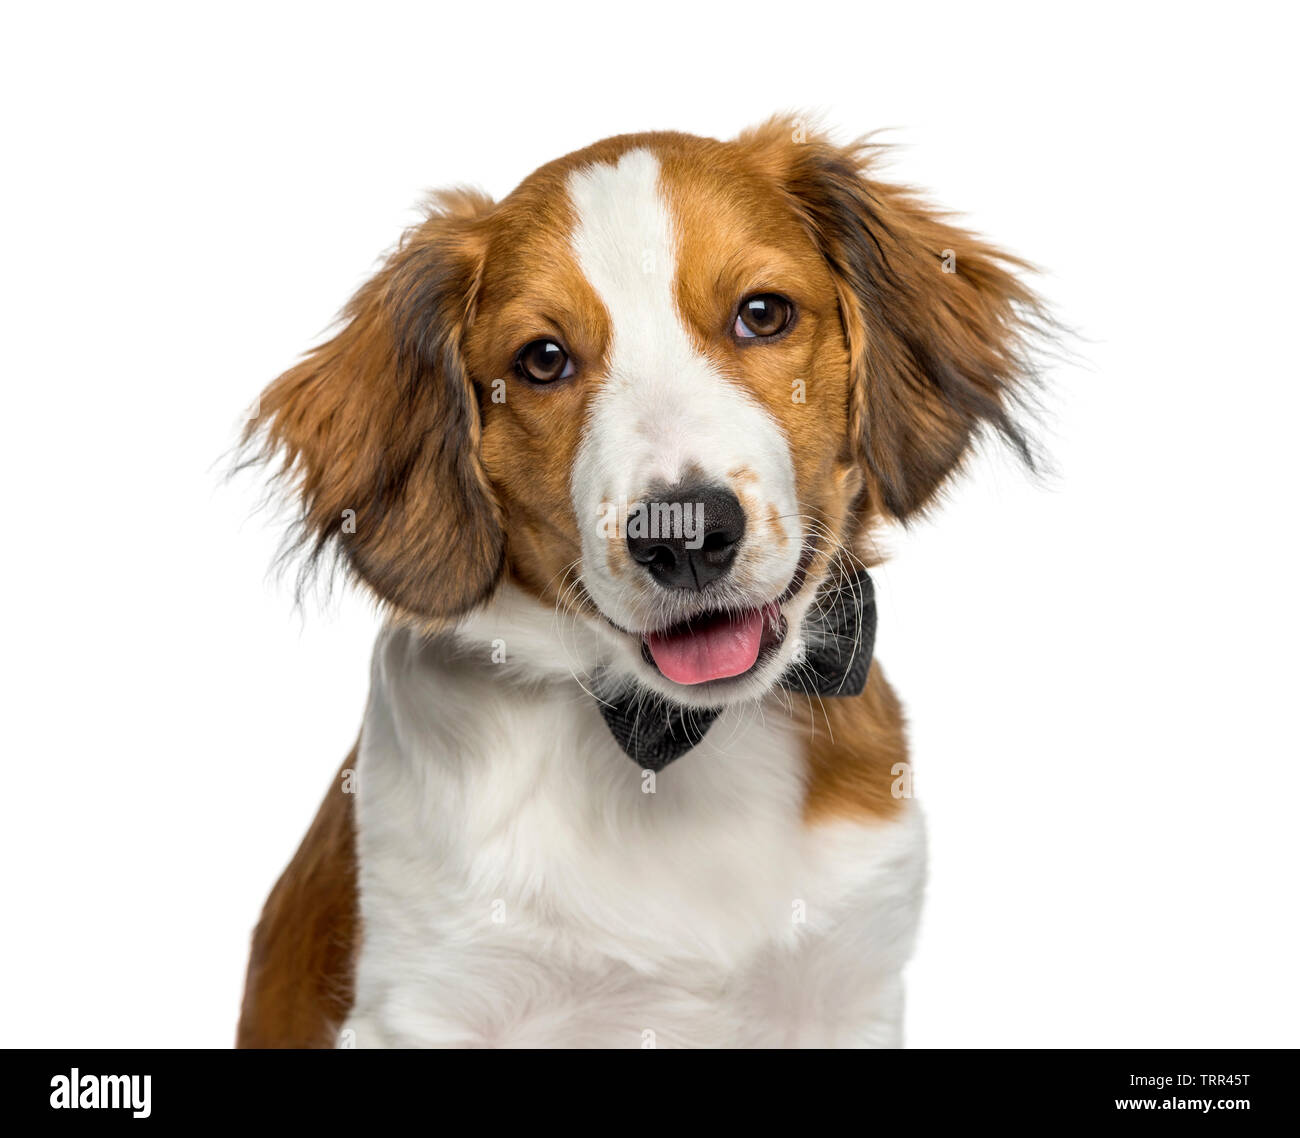 Kooikerhondje Puppy High Resolution Stock Photography And Images Alamy